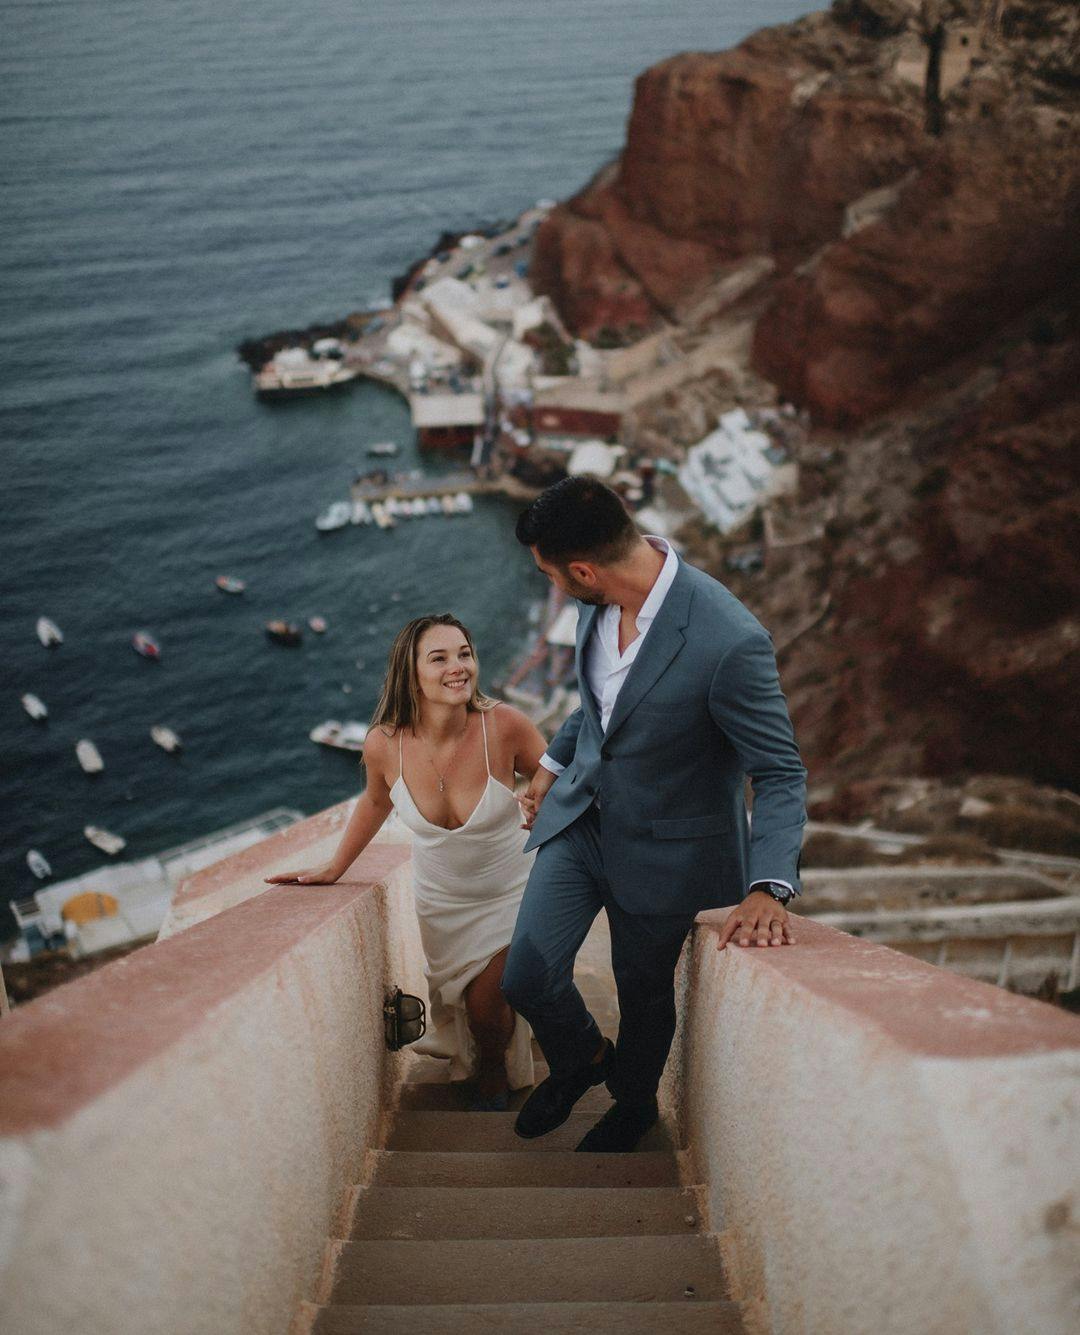 Bride wearing slinky simple lightweight wedding dress holding hands with groom wearing light blue beachy wedding suit walking up stairs in Greece.